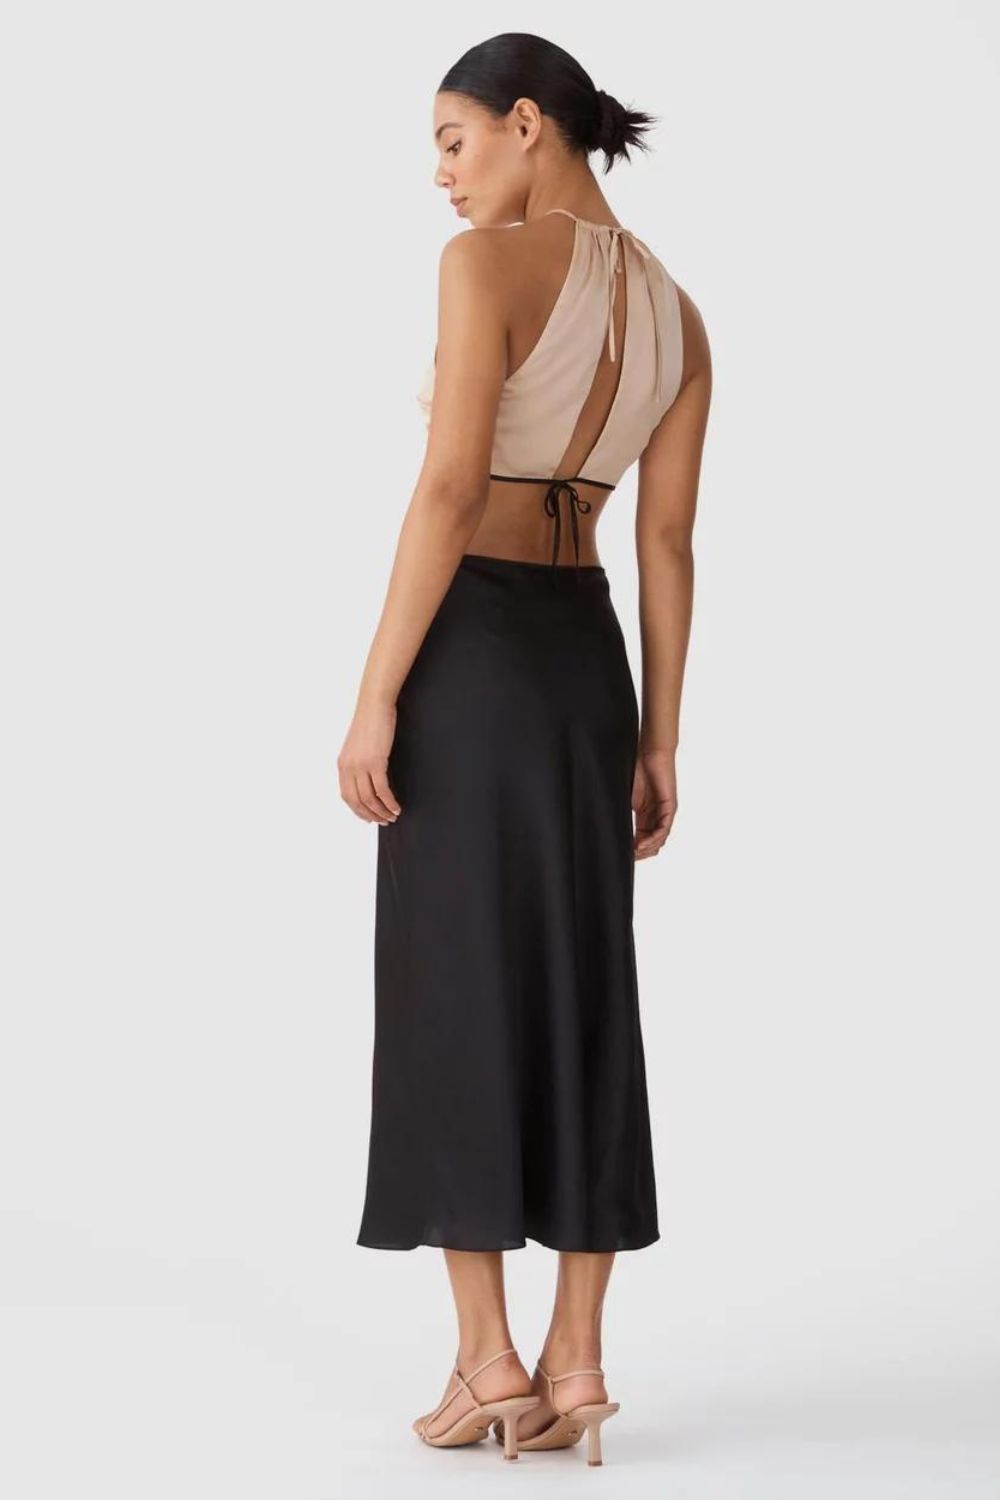 San Sloane | Selene Midi Dress | Black & Tan